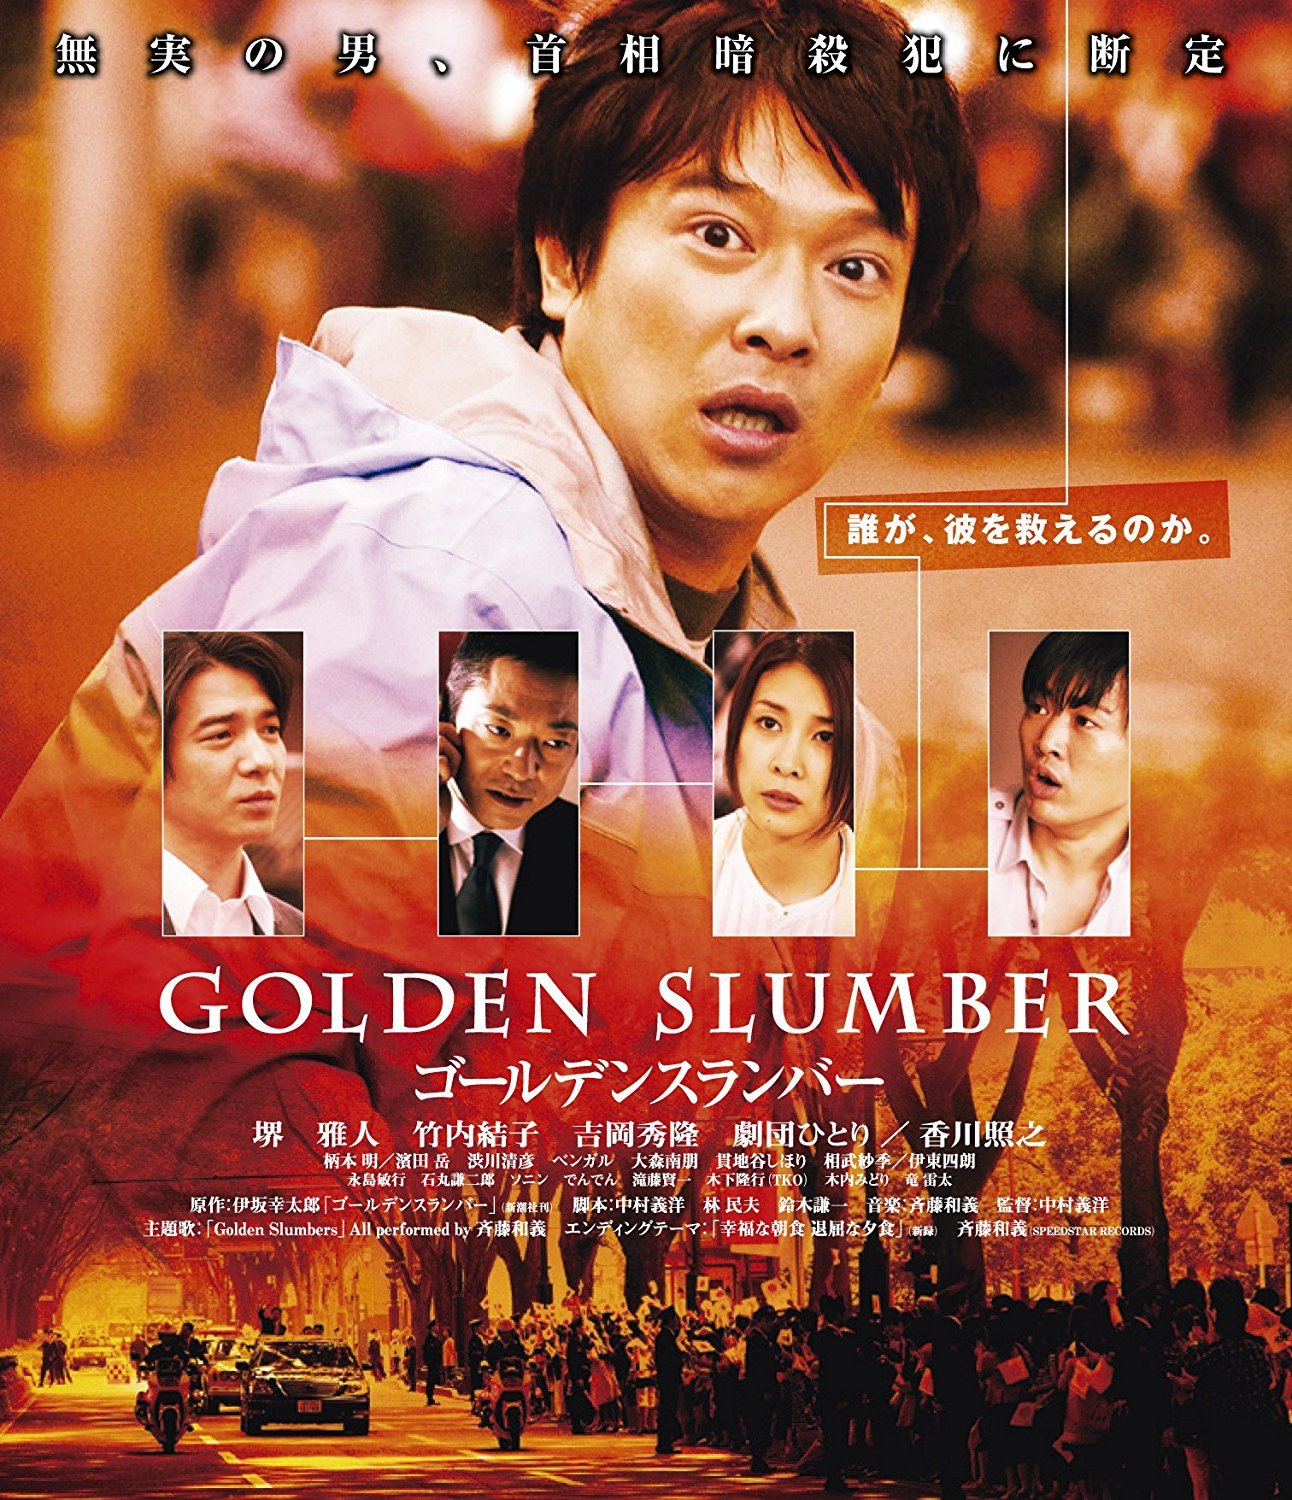 Golden Slumber Blu-ray (ゴールデンスランバー) (Japan)